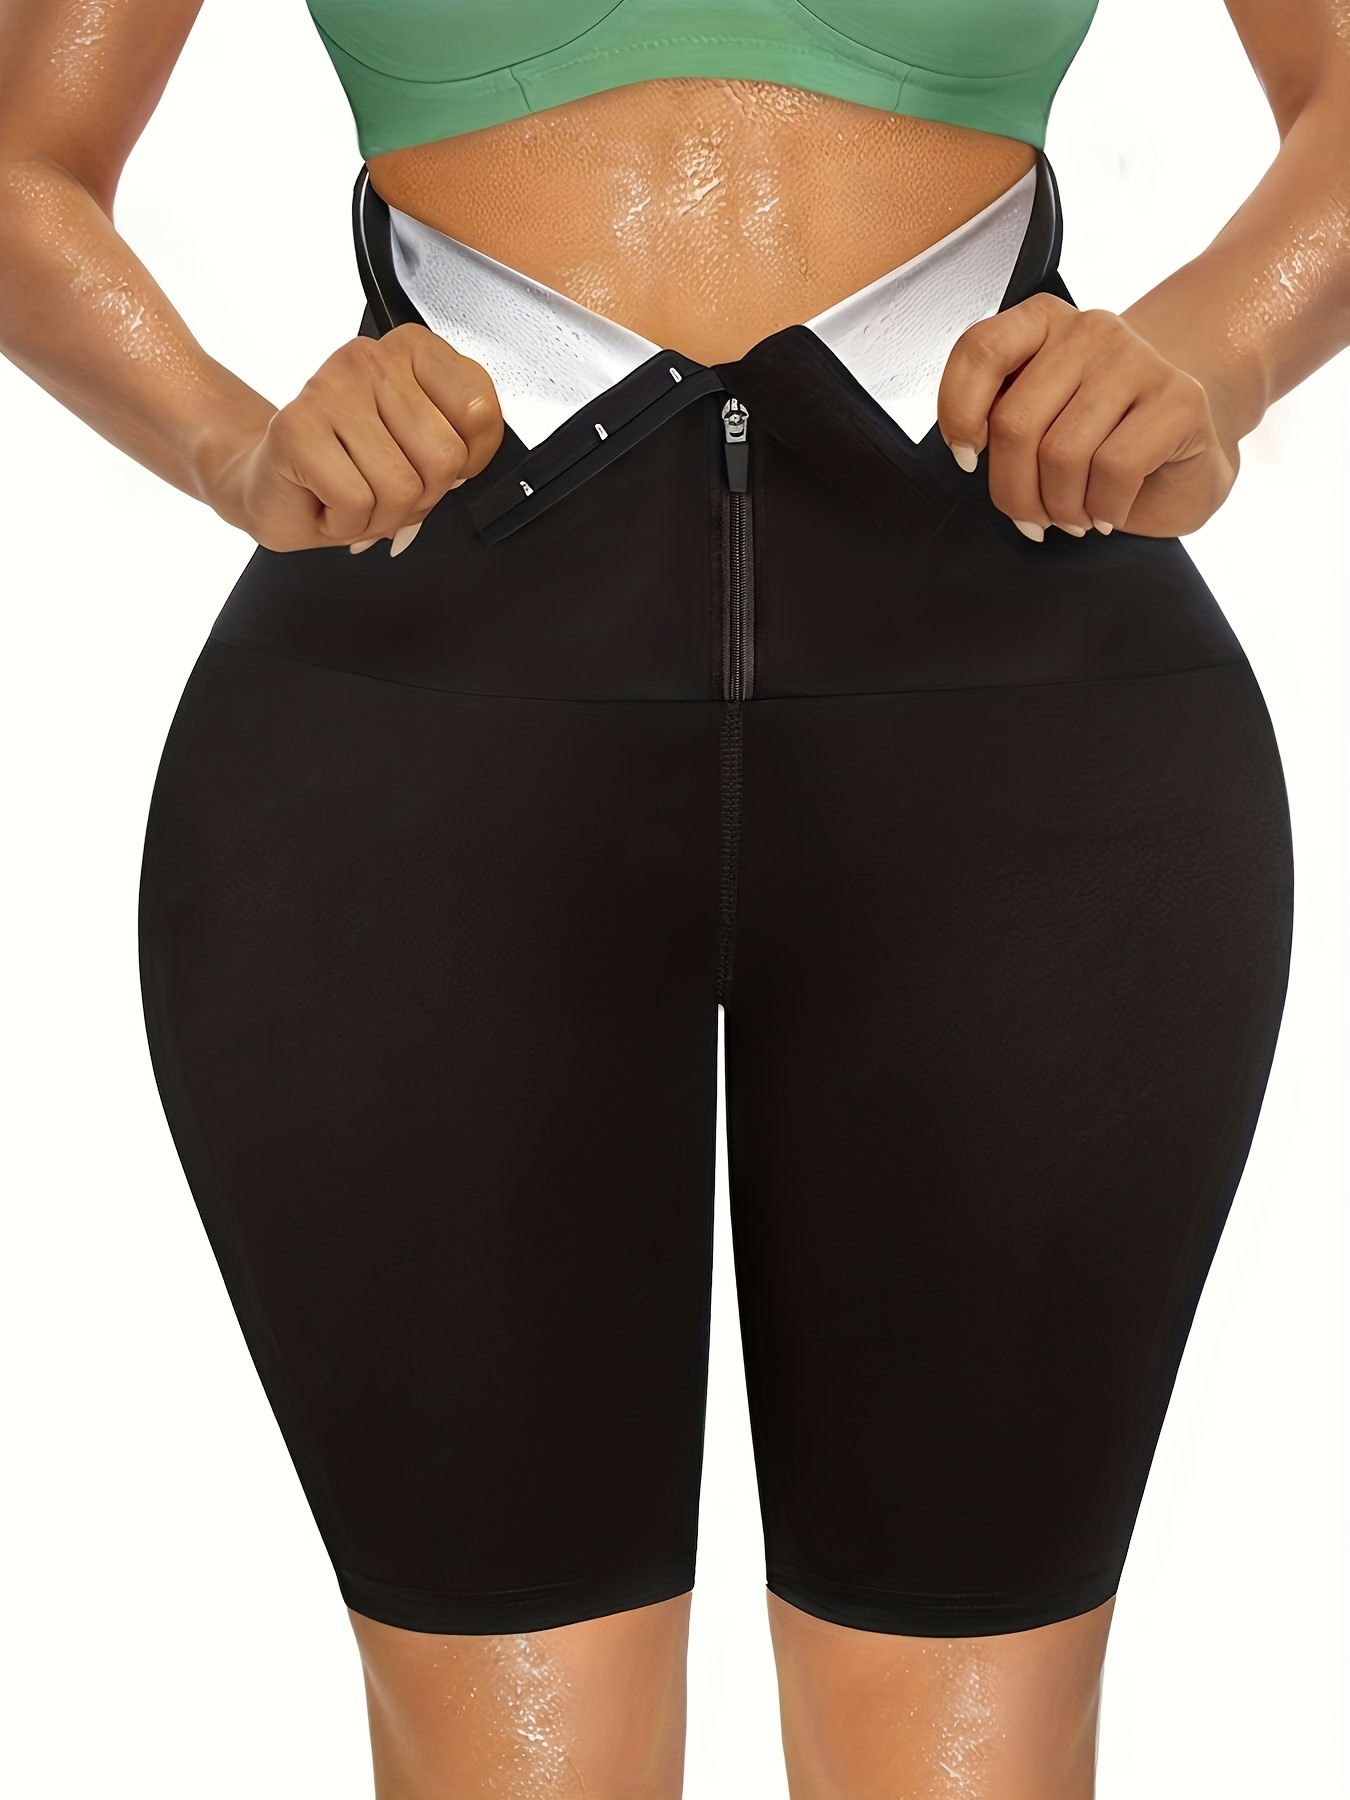 Black Sauna Sweat Sweatpants For Women, Stylist Weight Loss Warm Fitness  Workout Shapewear Jogger Pants